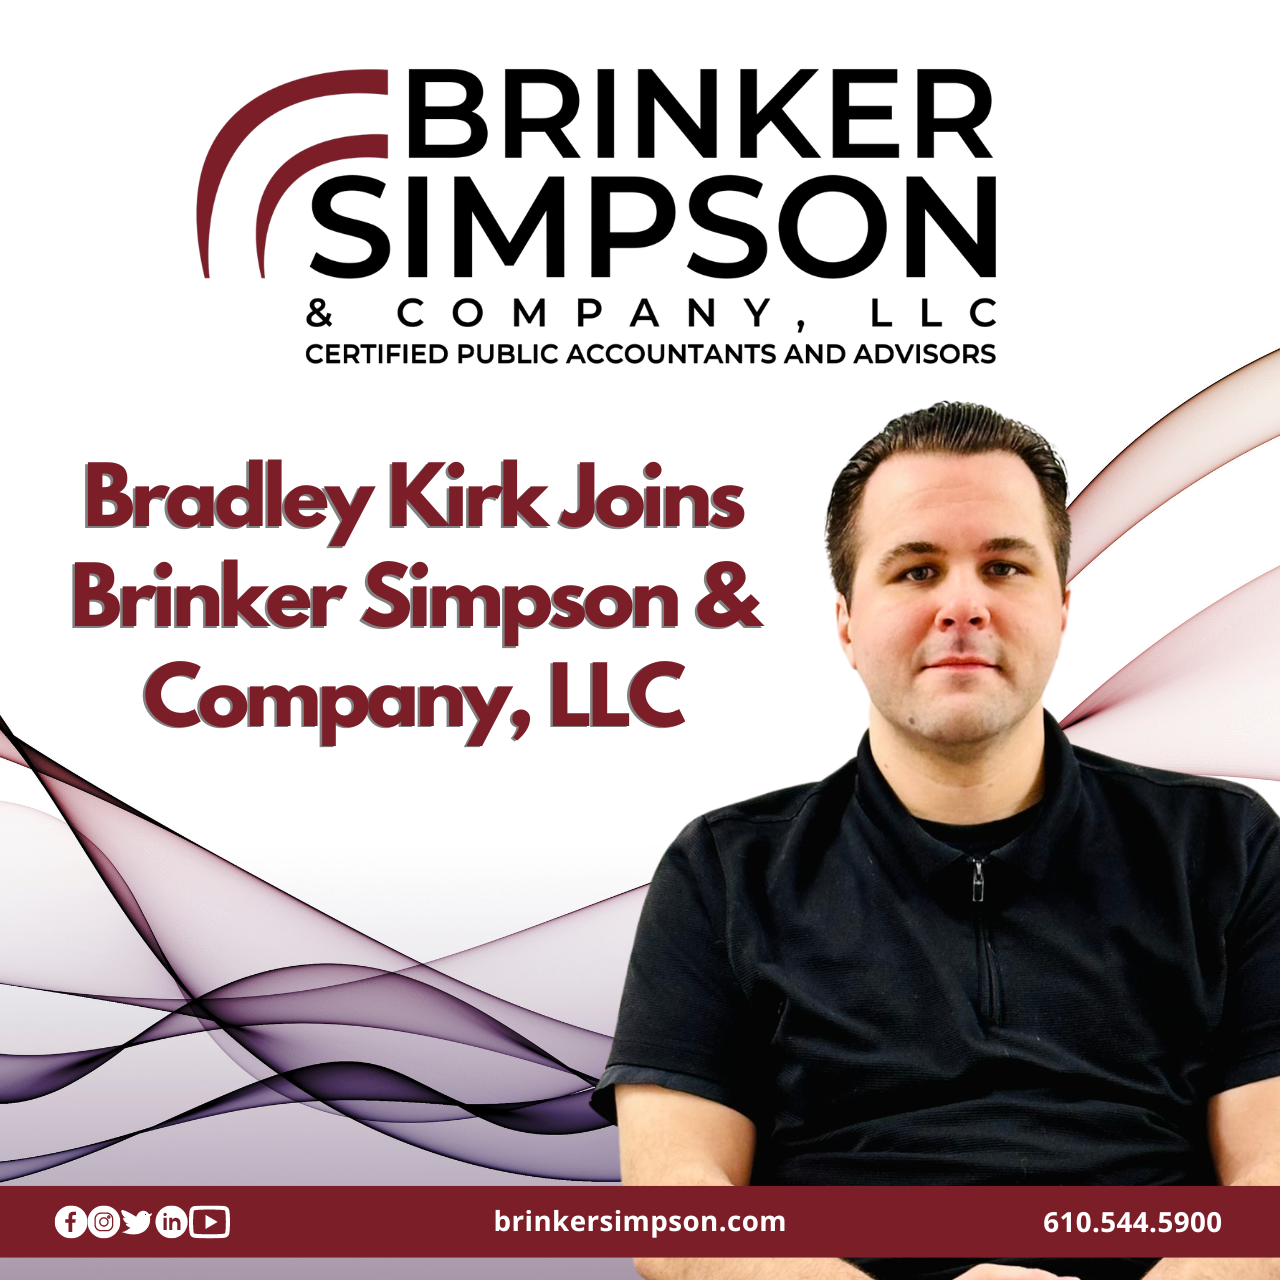 Bradley Kirk Joins Brinker Simpson & Company, LLC